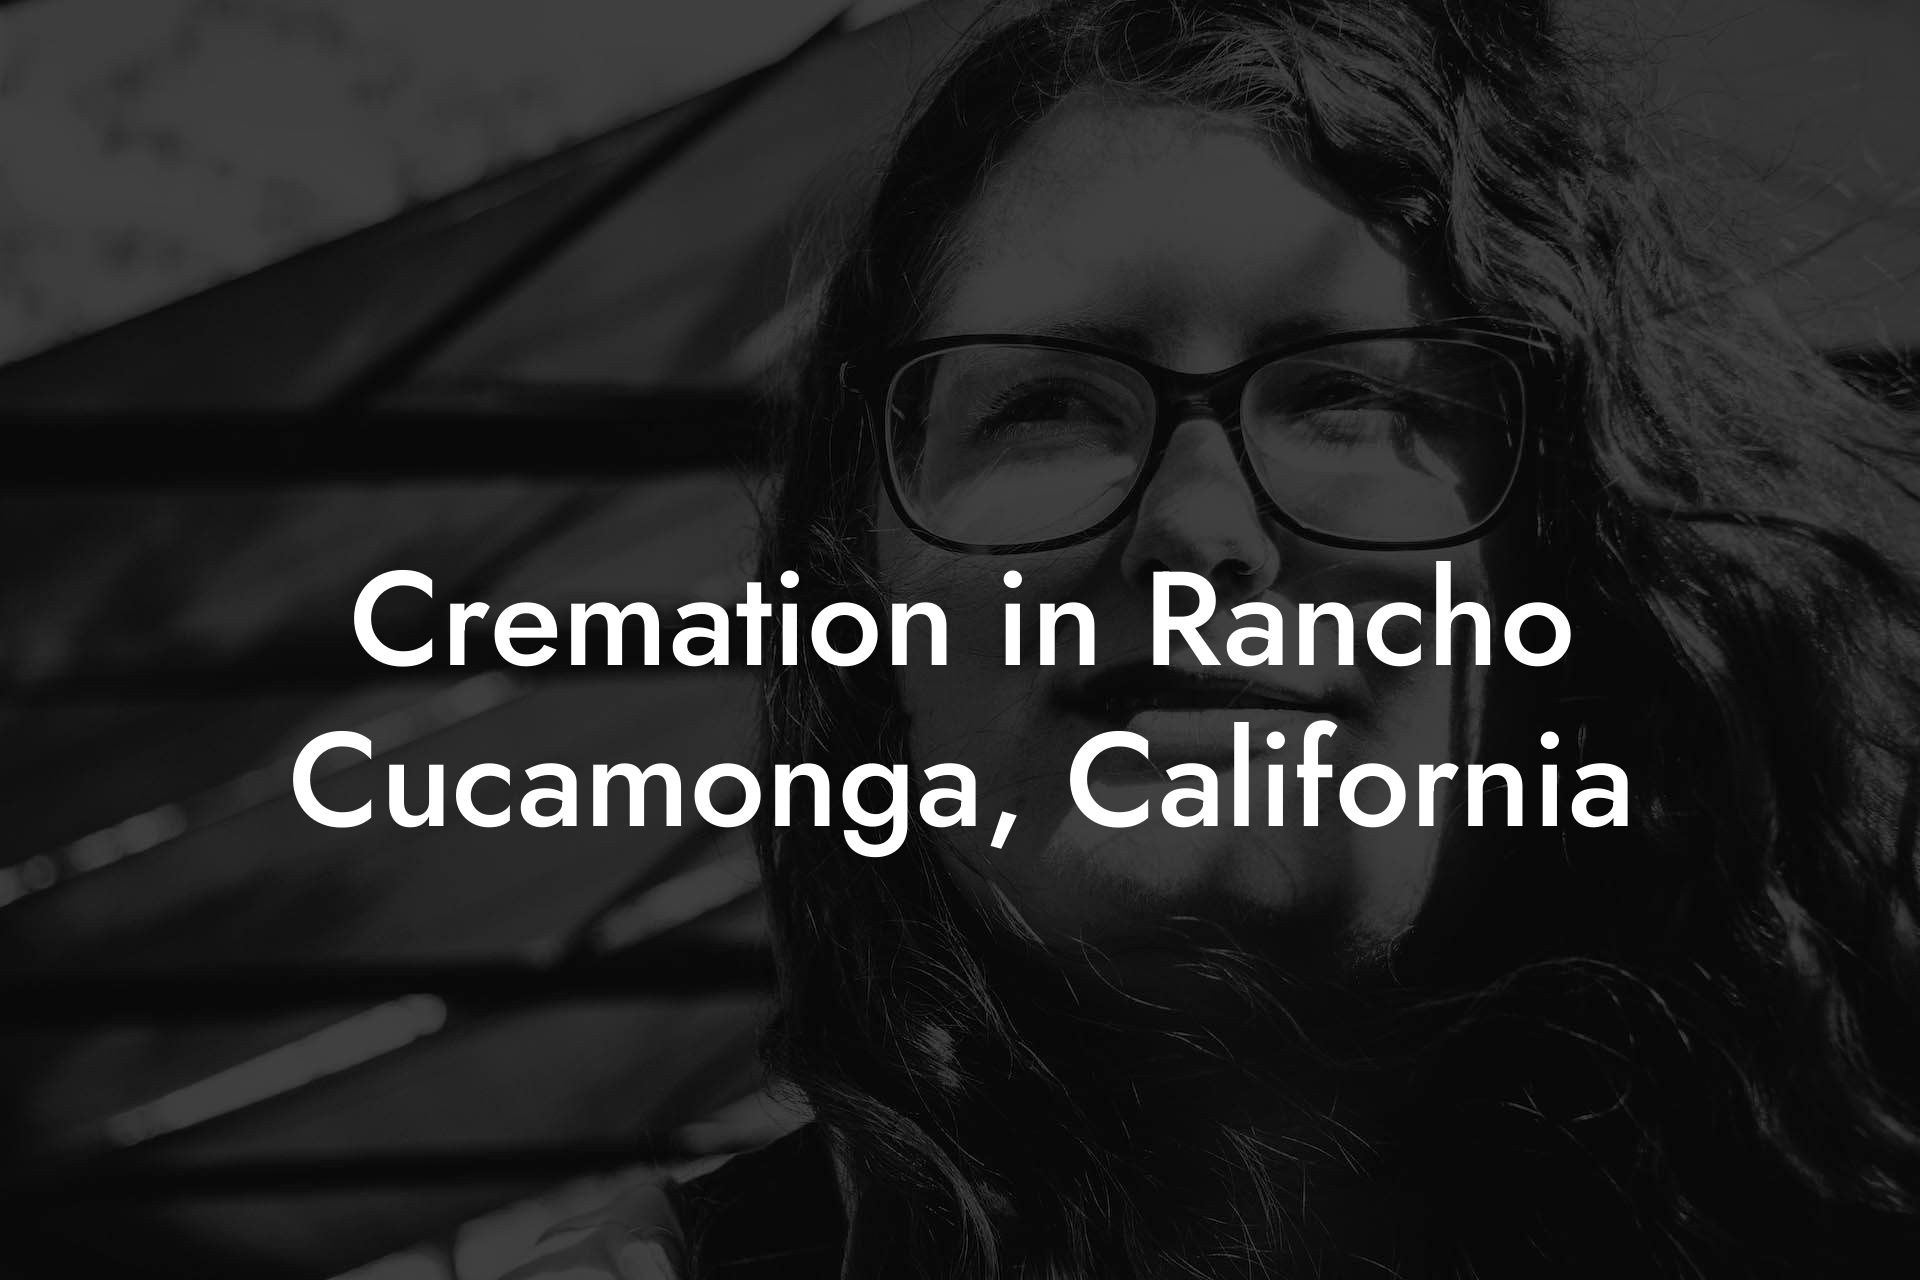 Cremation in Rancho Cucamonga, California